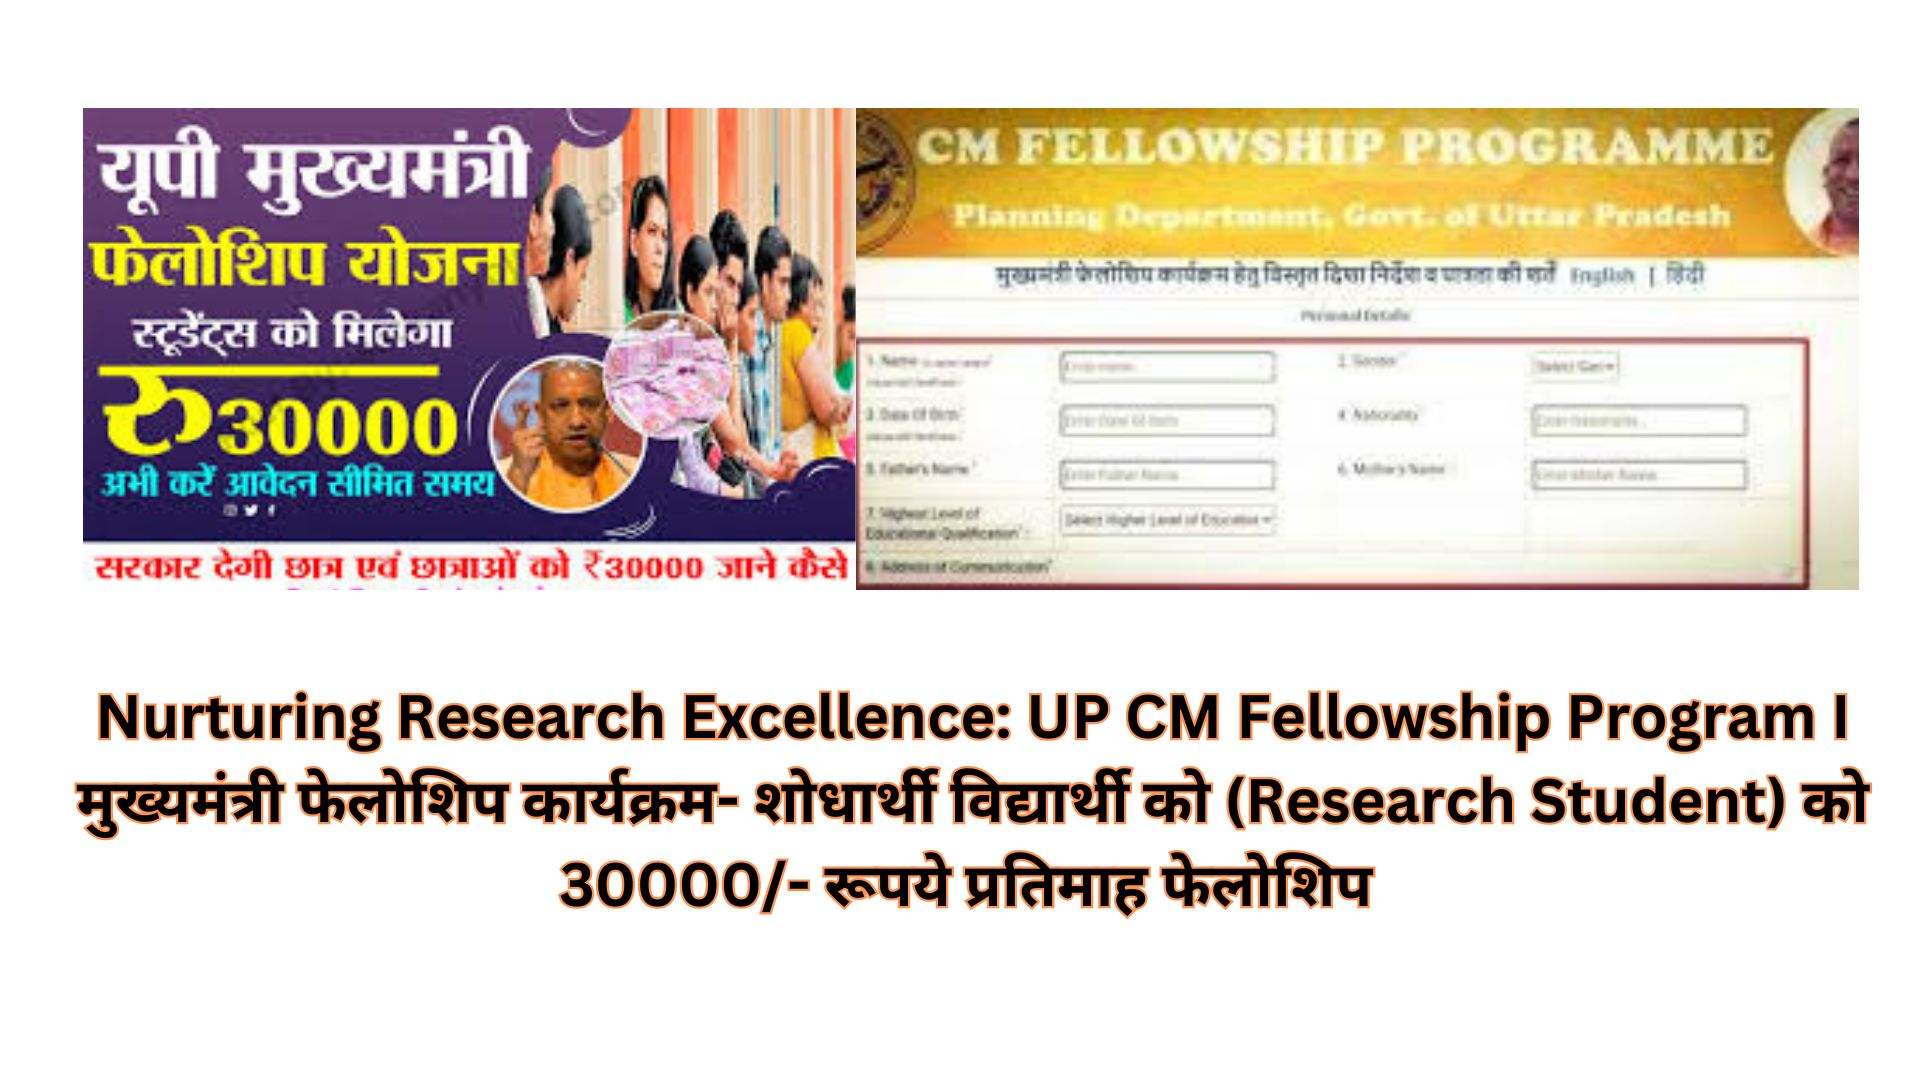 Nurturing Research Excellence: UP CM Fellowship Program I मुख्यमंत्री फेलोशिप कार्यक्रम- शोधार्थी विद्यार्थी को (Research Student) को 30000/- रूपये प्रतिमाह फेलोशिप